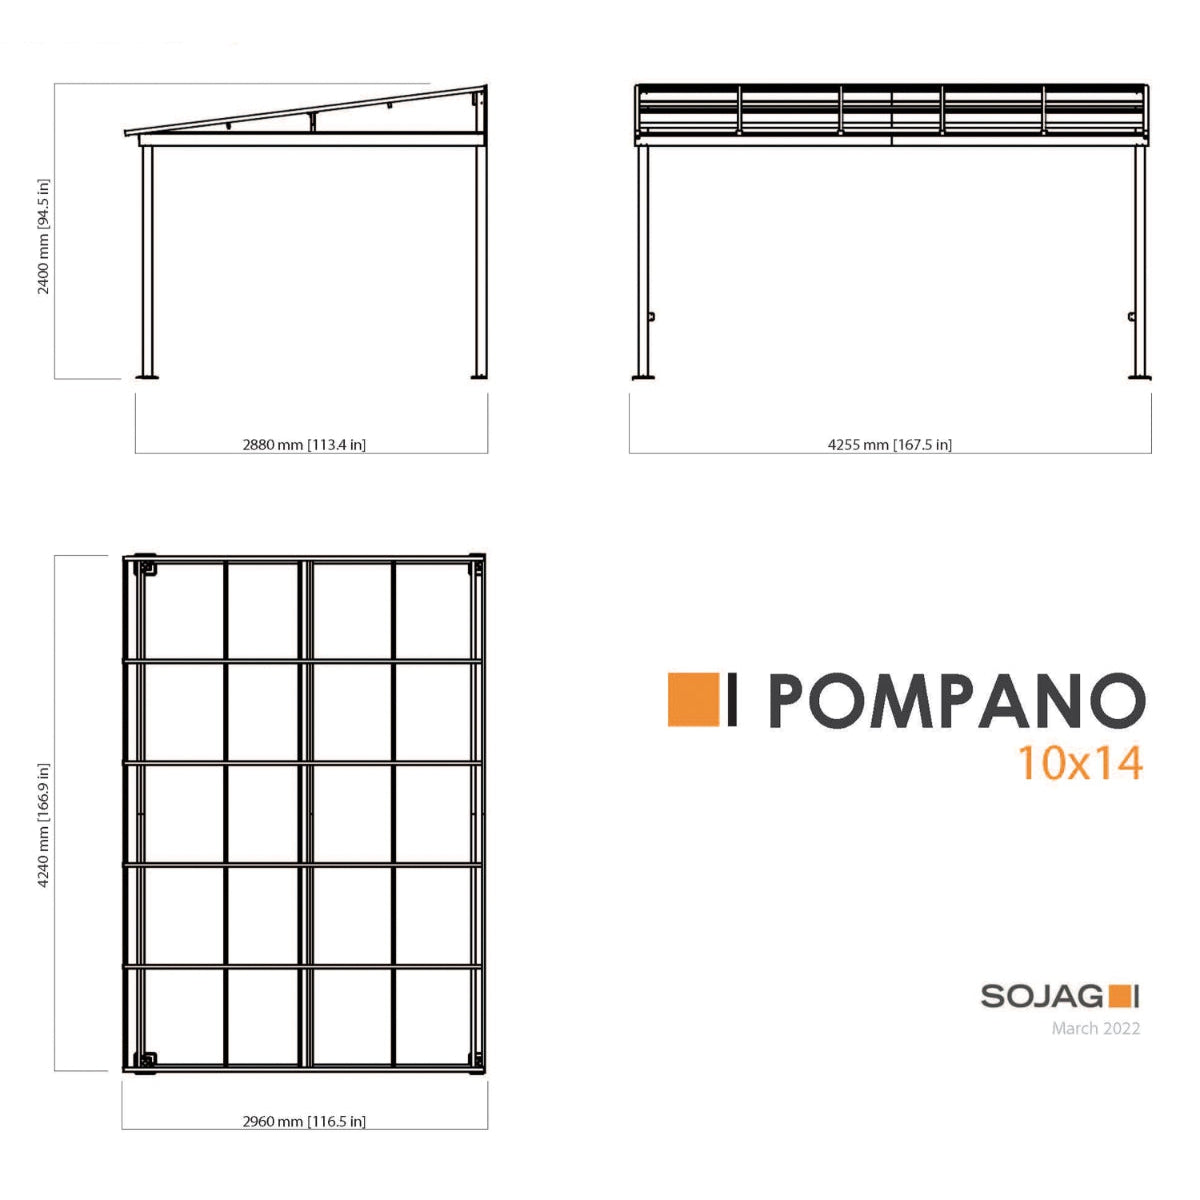 Pompano Aluminum Wall-Mounted Gazebo Patio Cover 10 x 14 ft | Sojag-Delightful Yard